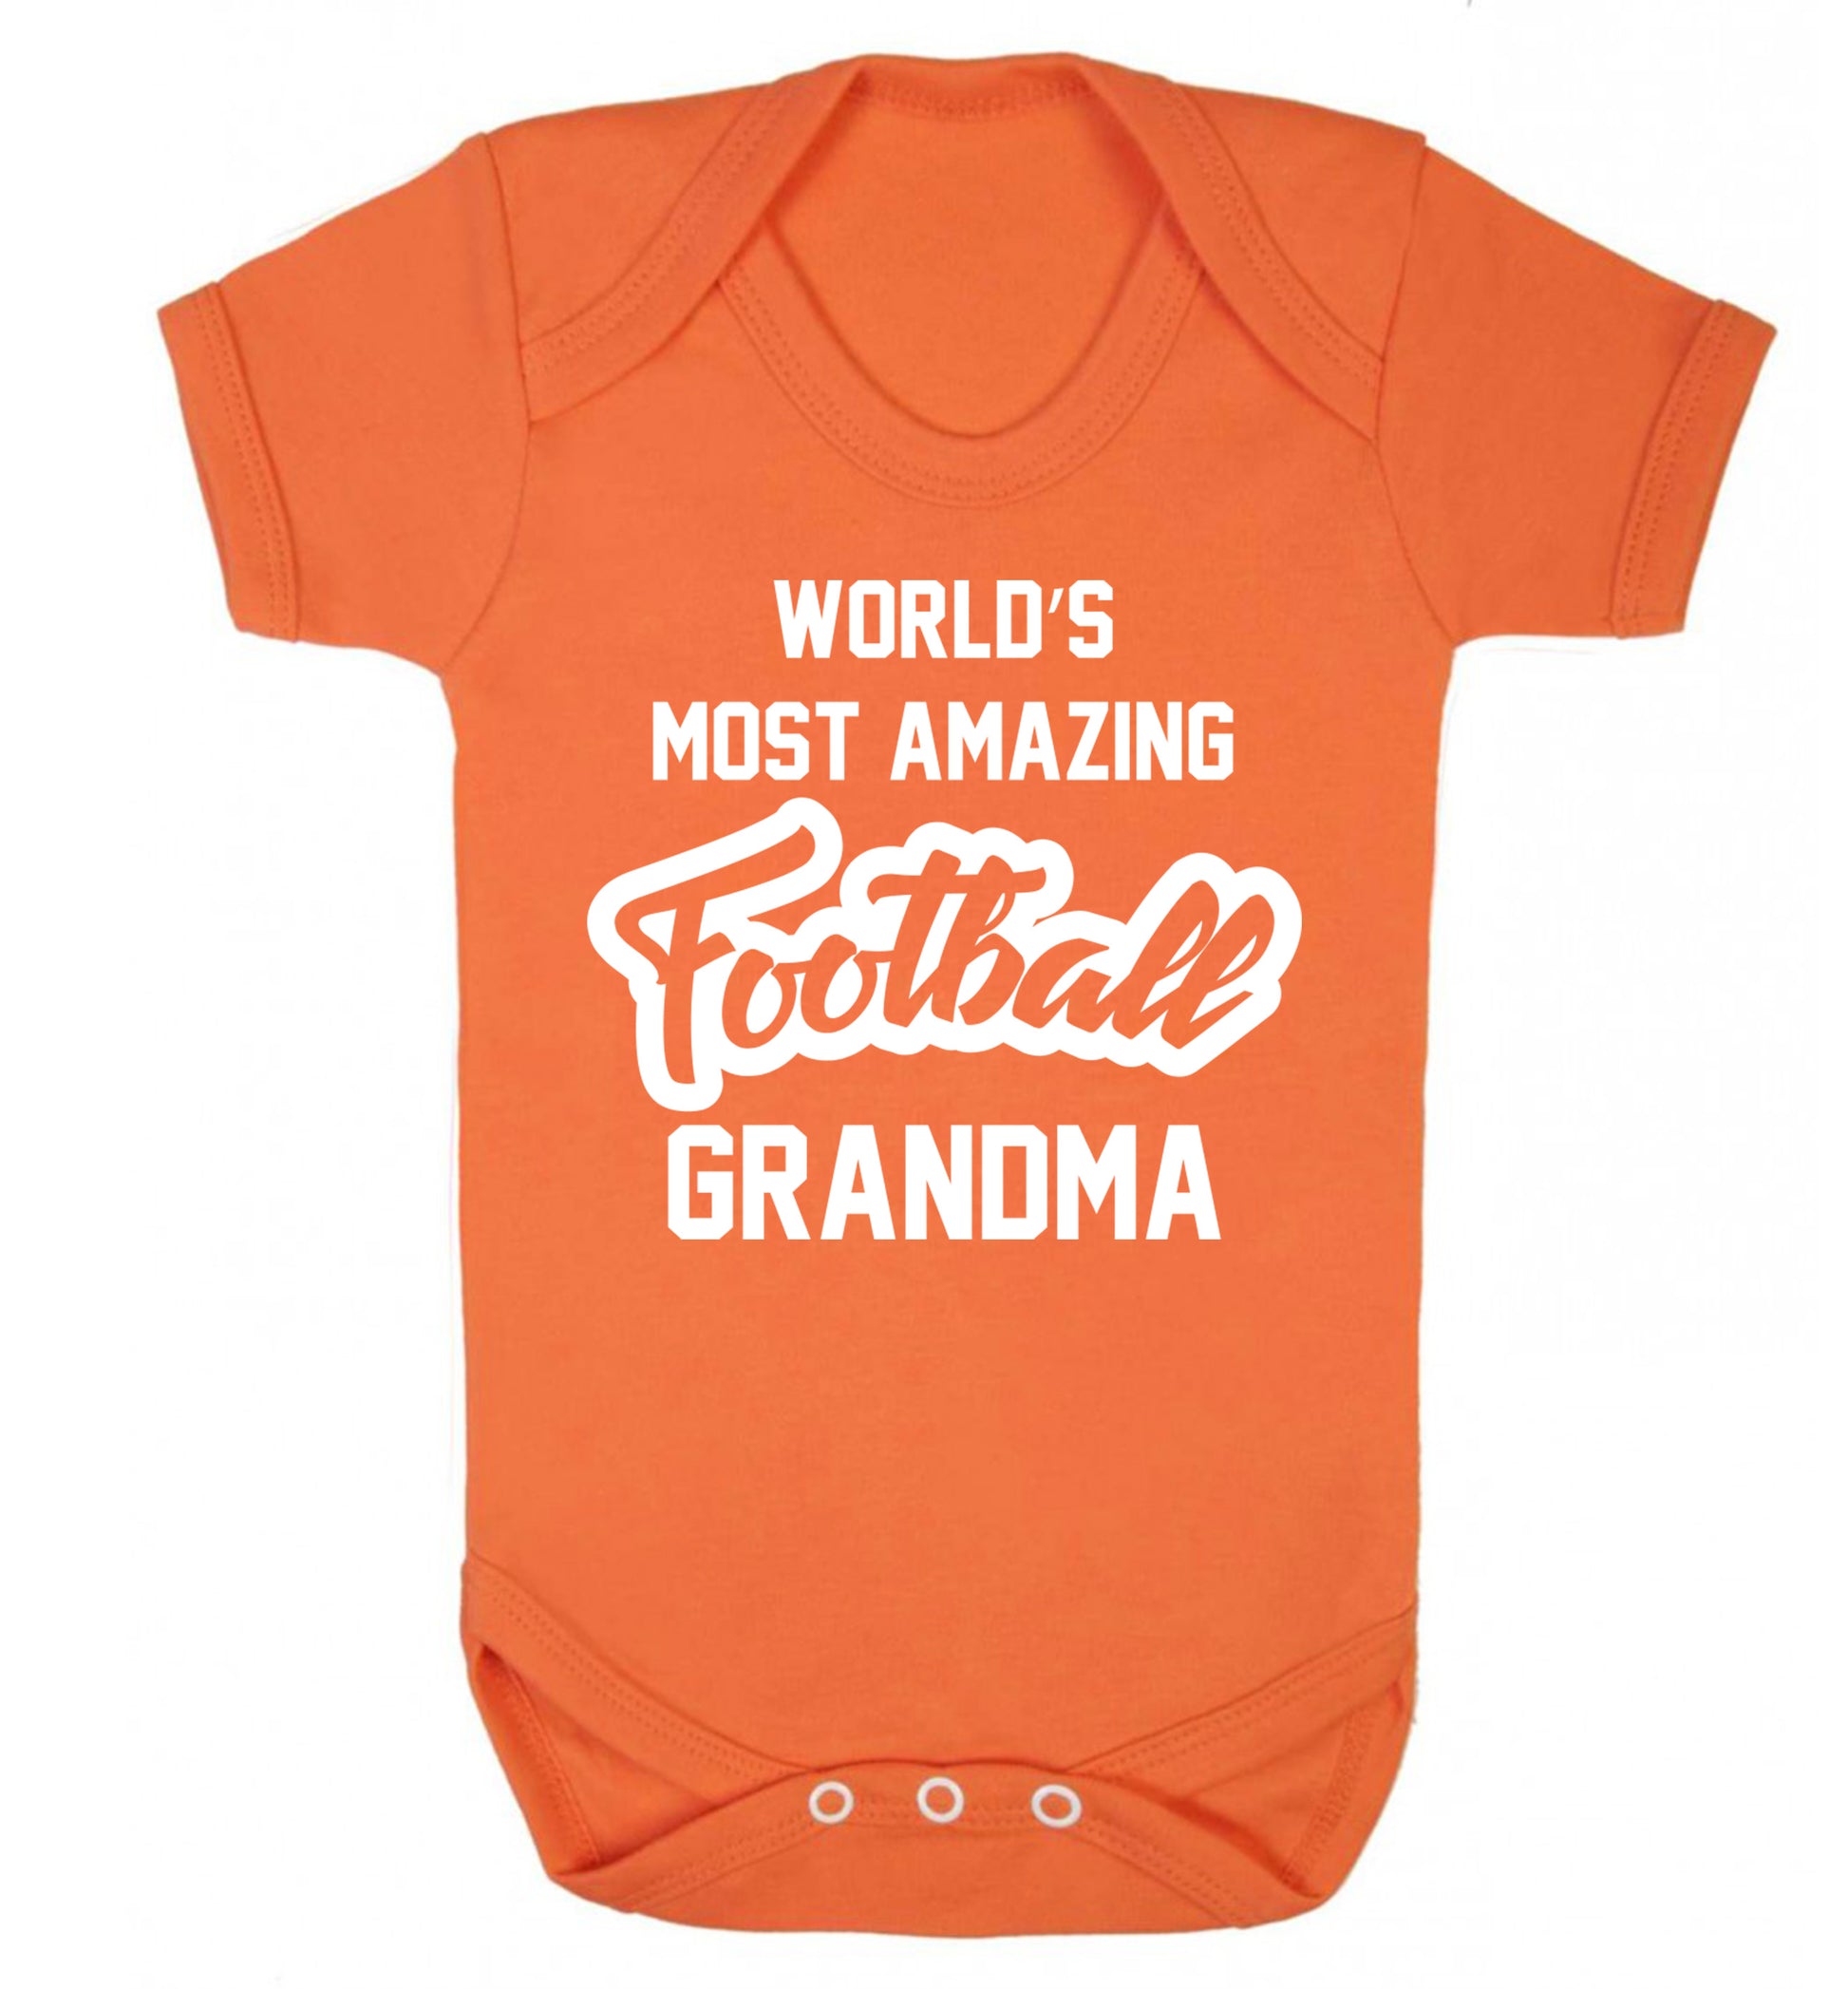 Worlds most amazing football grandma Baby Vest orange 18-24 months